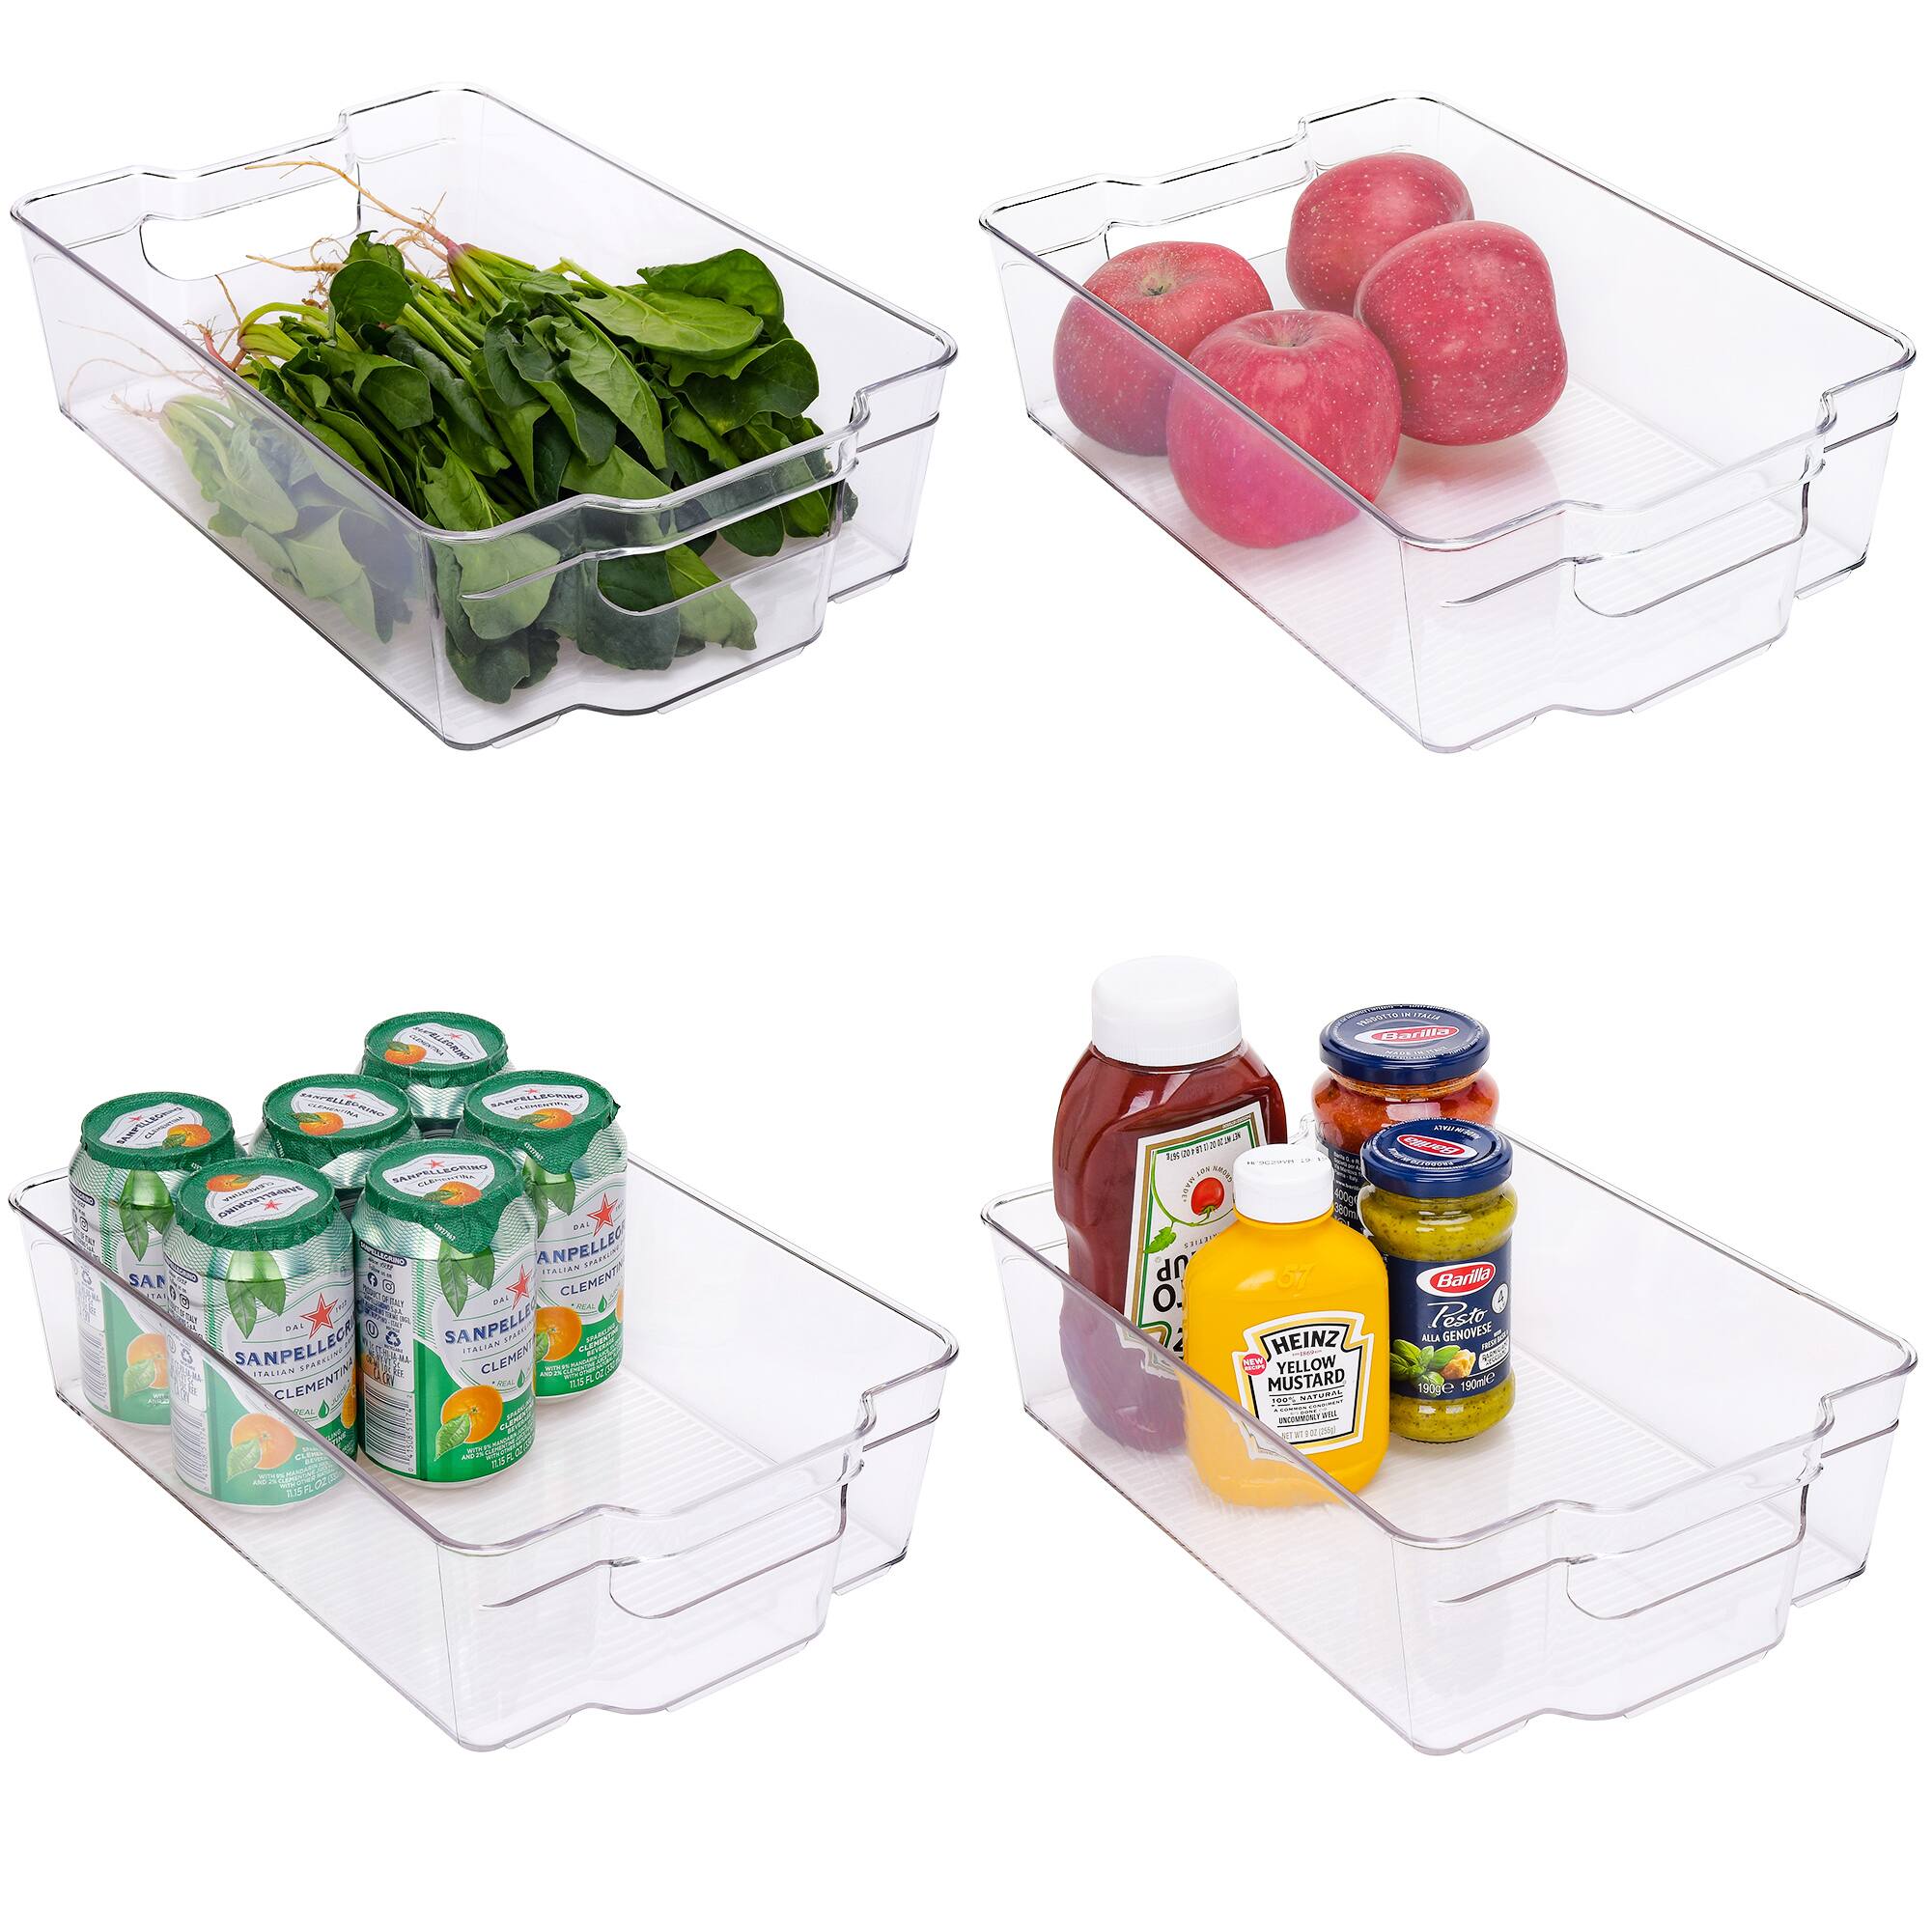 StorageWorks Clear Fridge Plastic Organizer Bins with Handles (BPA-Free) 4 Pack from $17.24-18.74